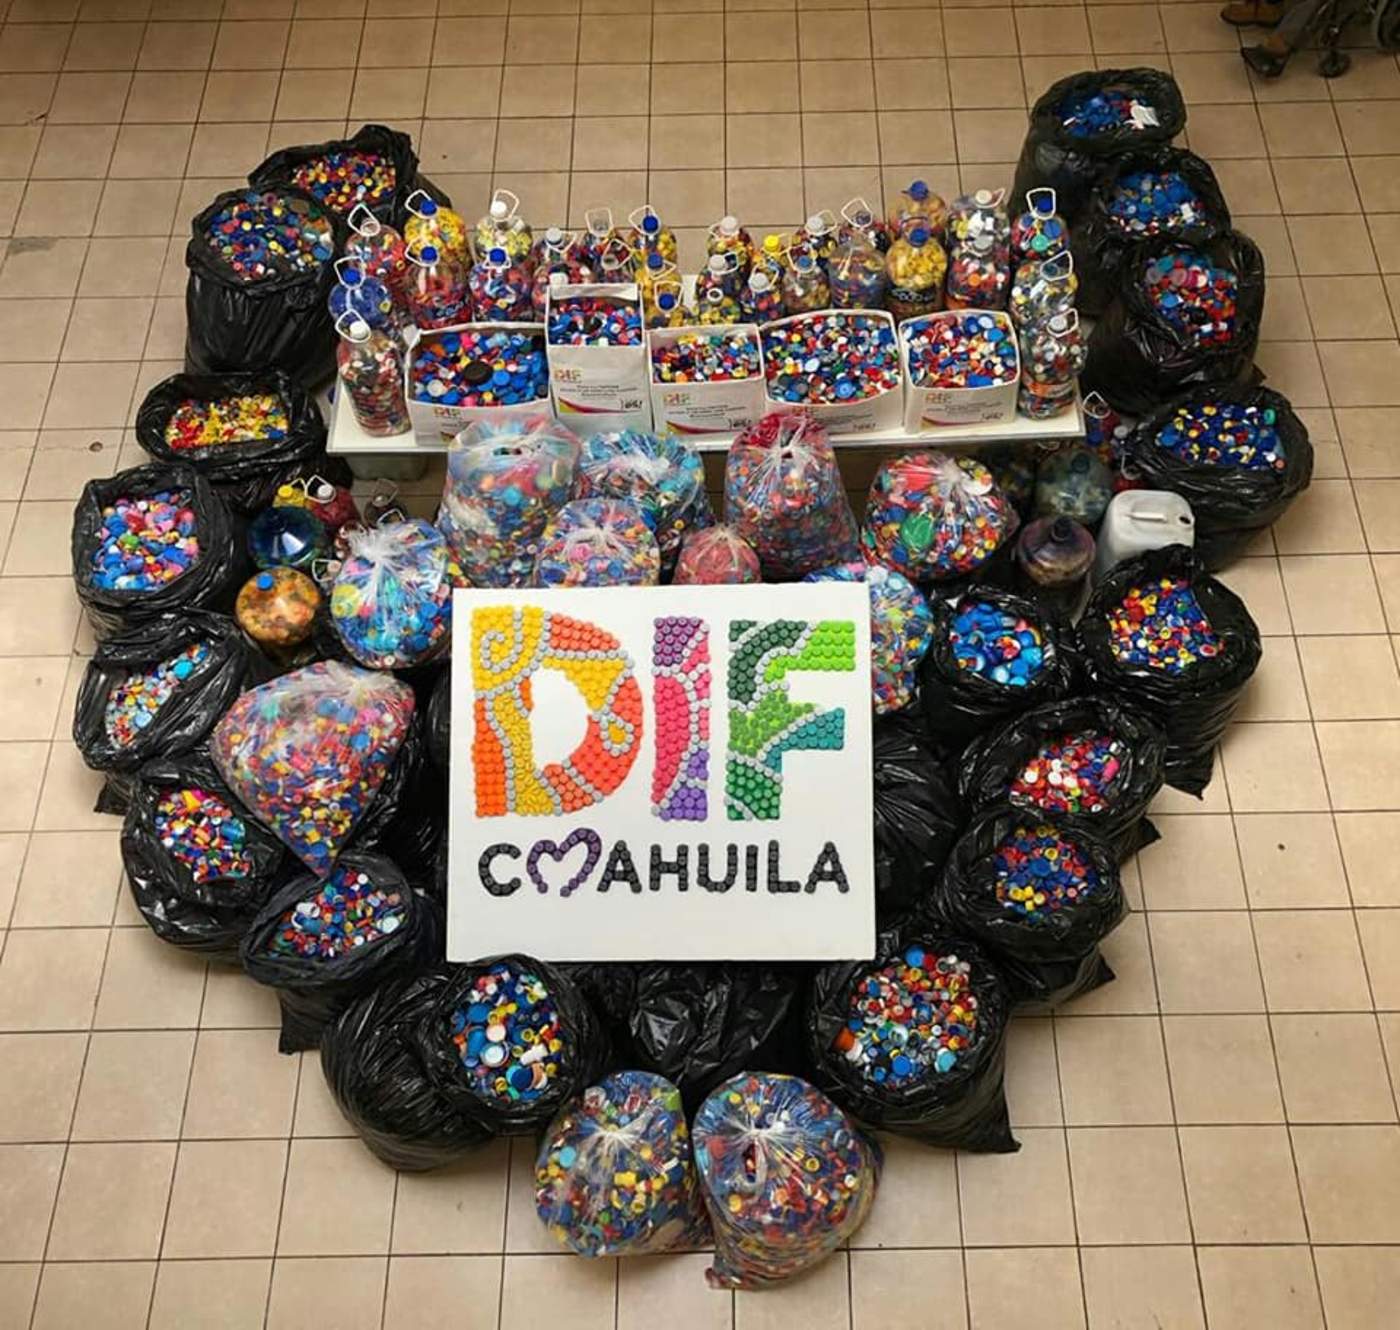 Recolectan 615 kilos de tapas en apoyo a menores con cáncer de Coahuila